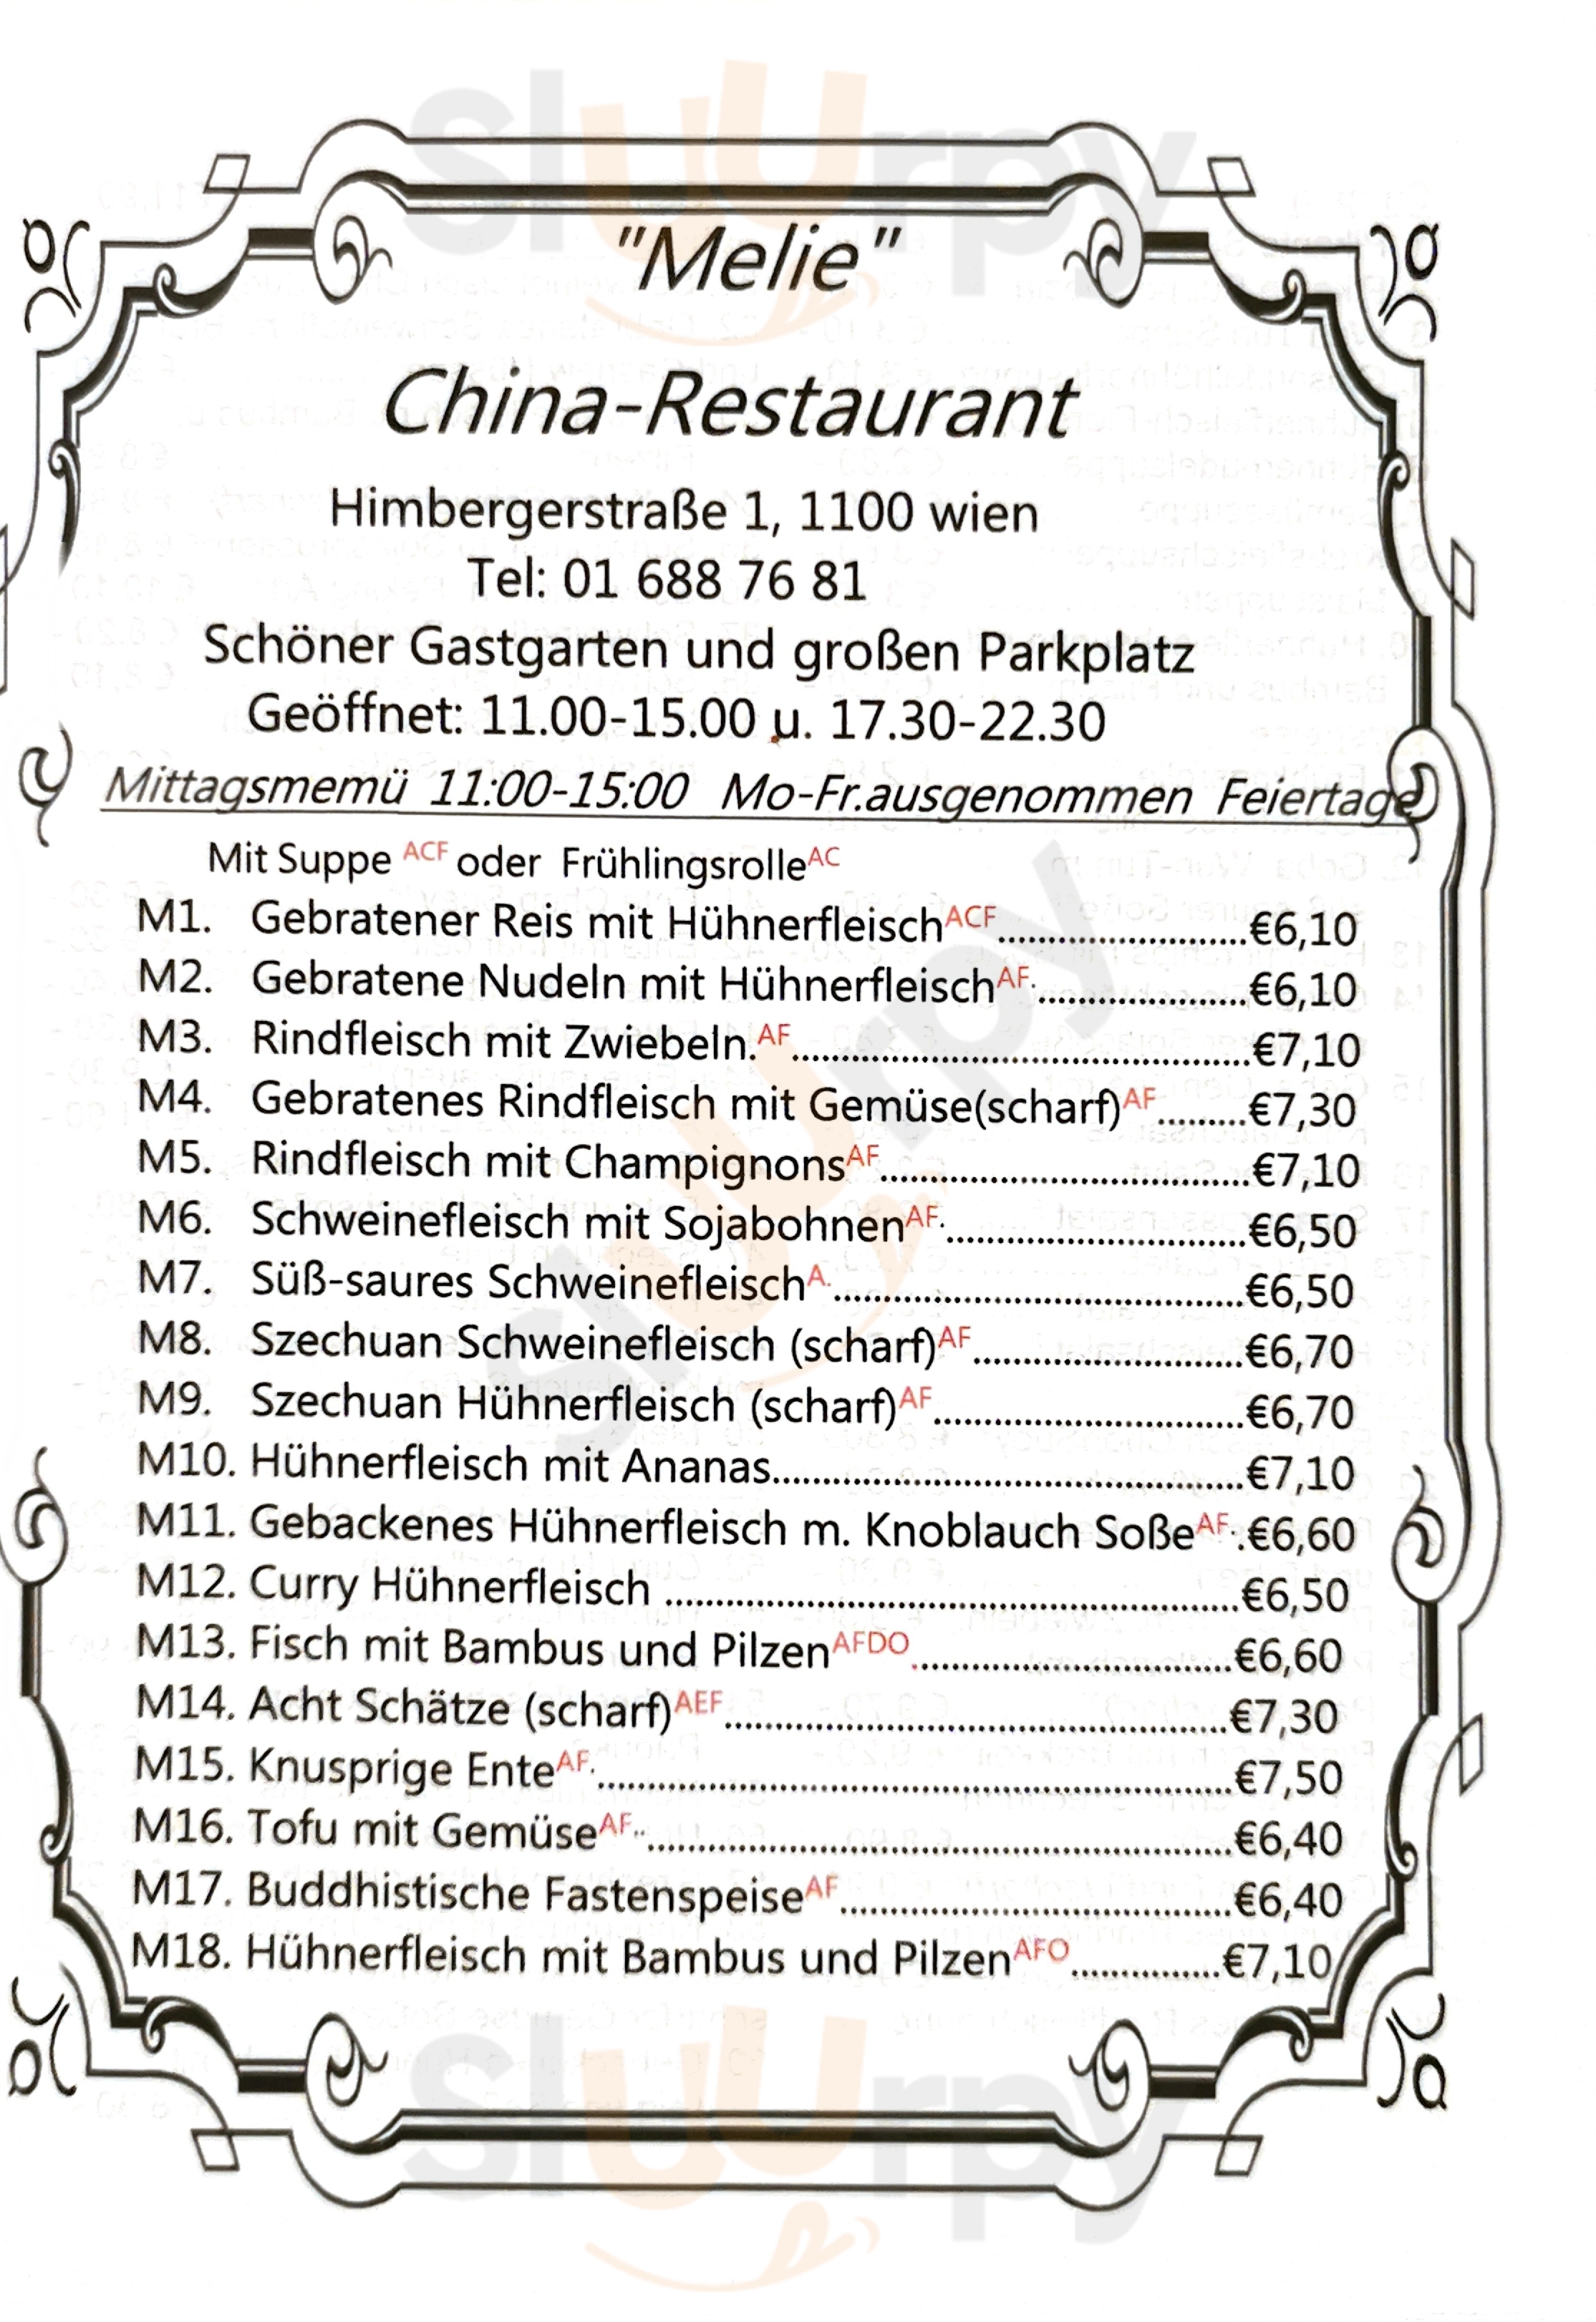 China Restaurant Me-lie Wien Menu - 1